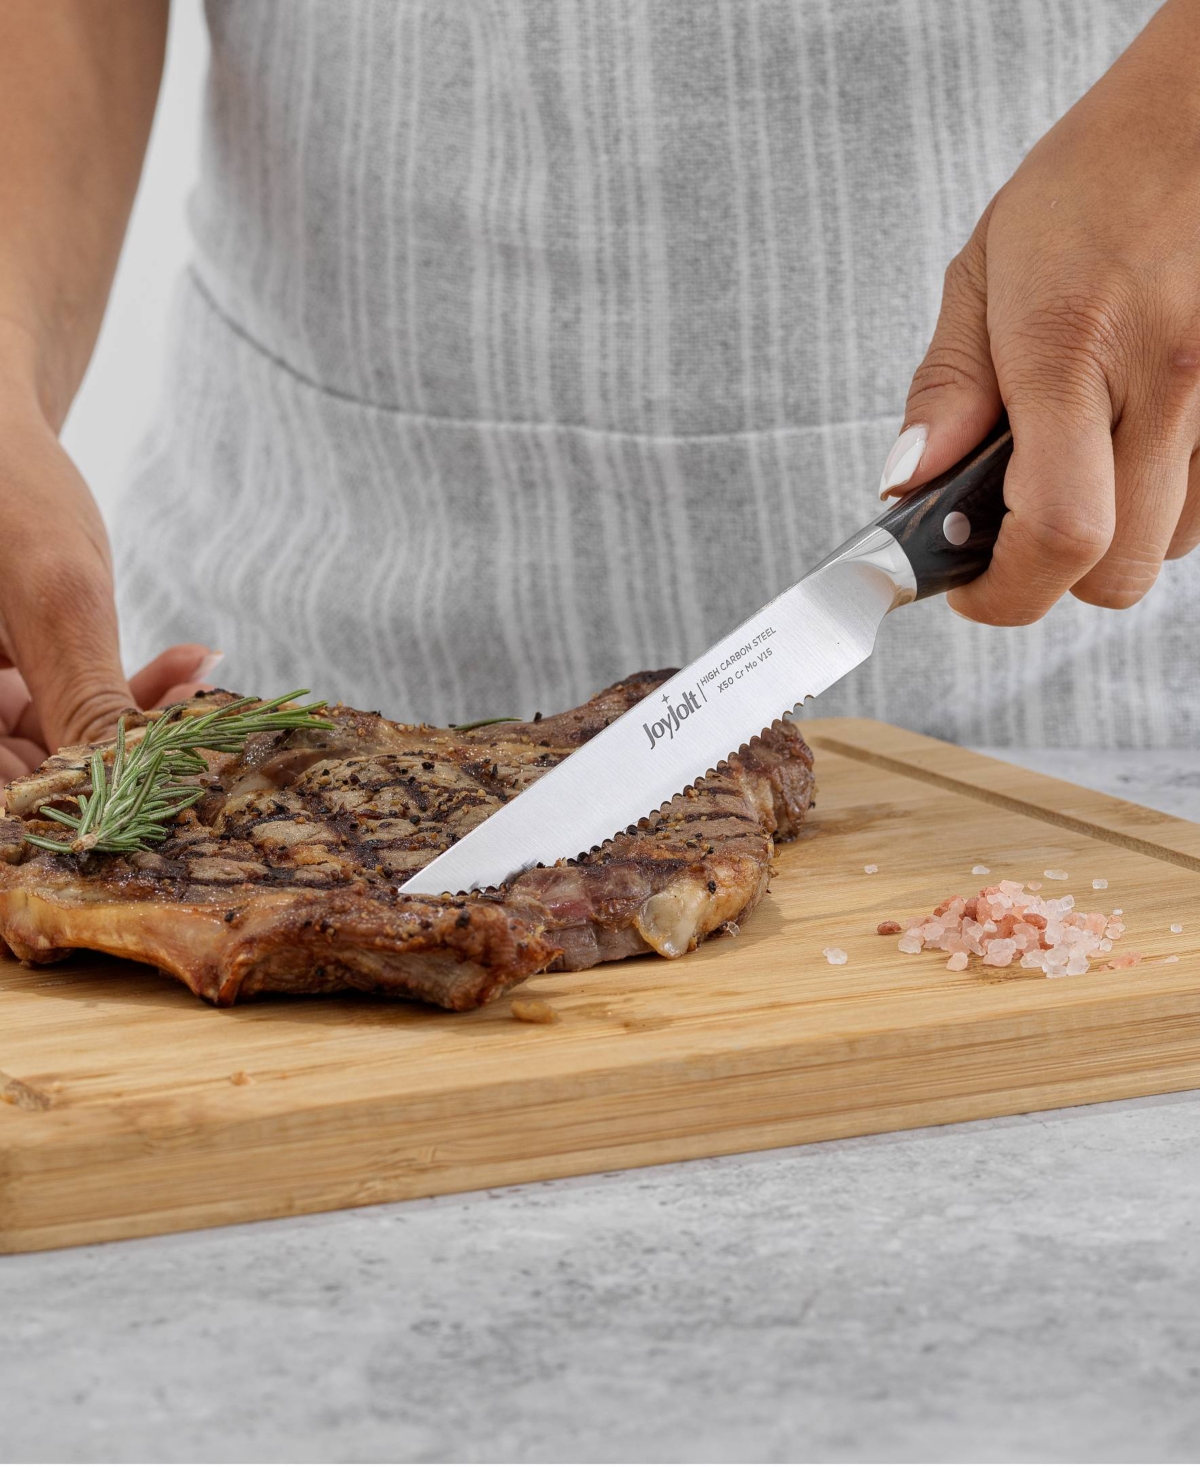 Shop Joyjolt 4 Piece Steak Knife High Carbon Steel Kitchen Knife Set In Silver